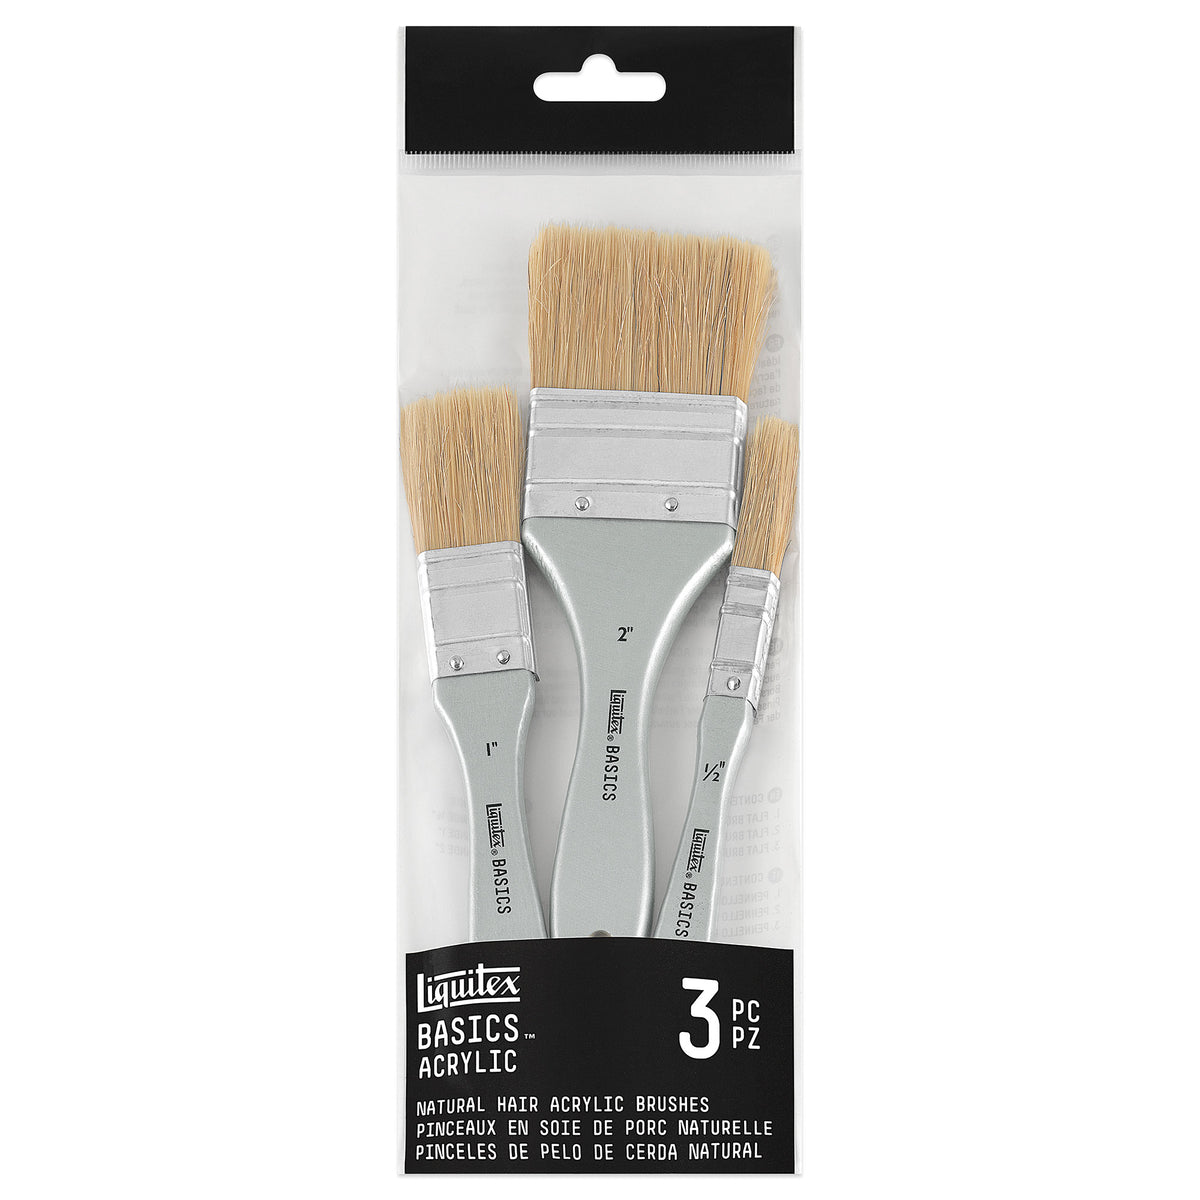 Liquitex Basics Natural Hair Acrylic Brushes - Pack of 3